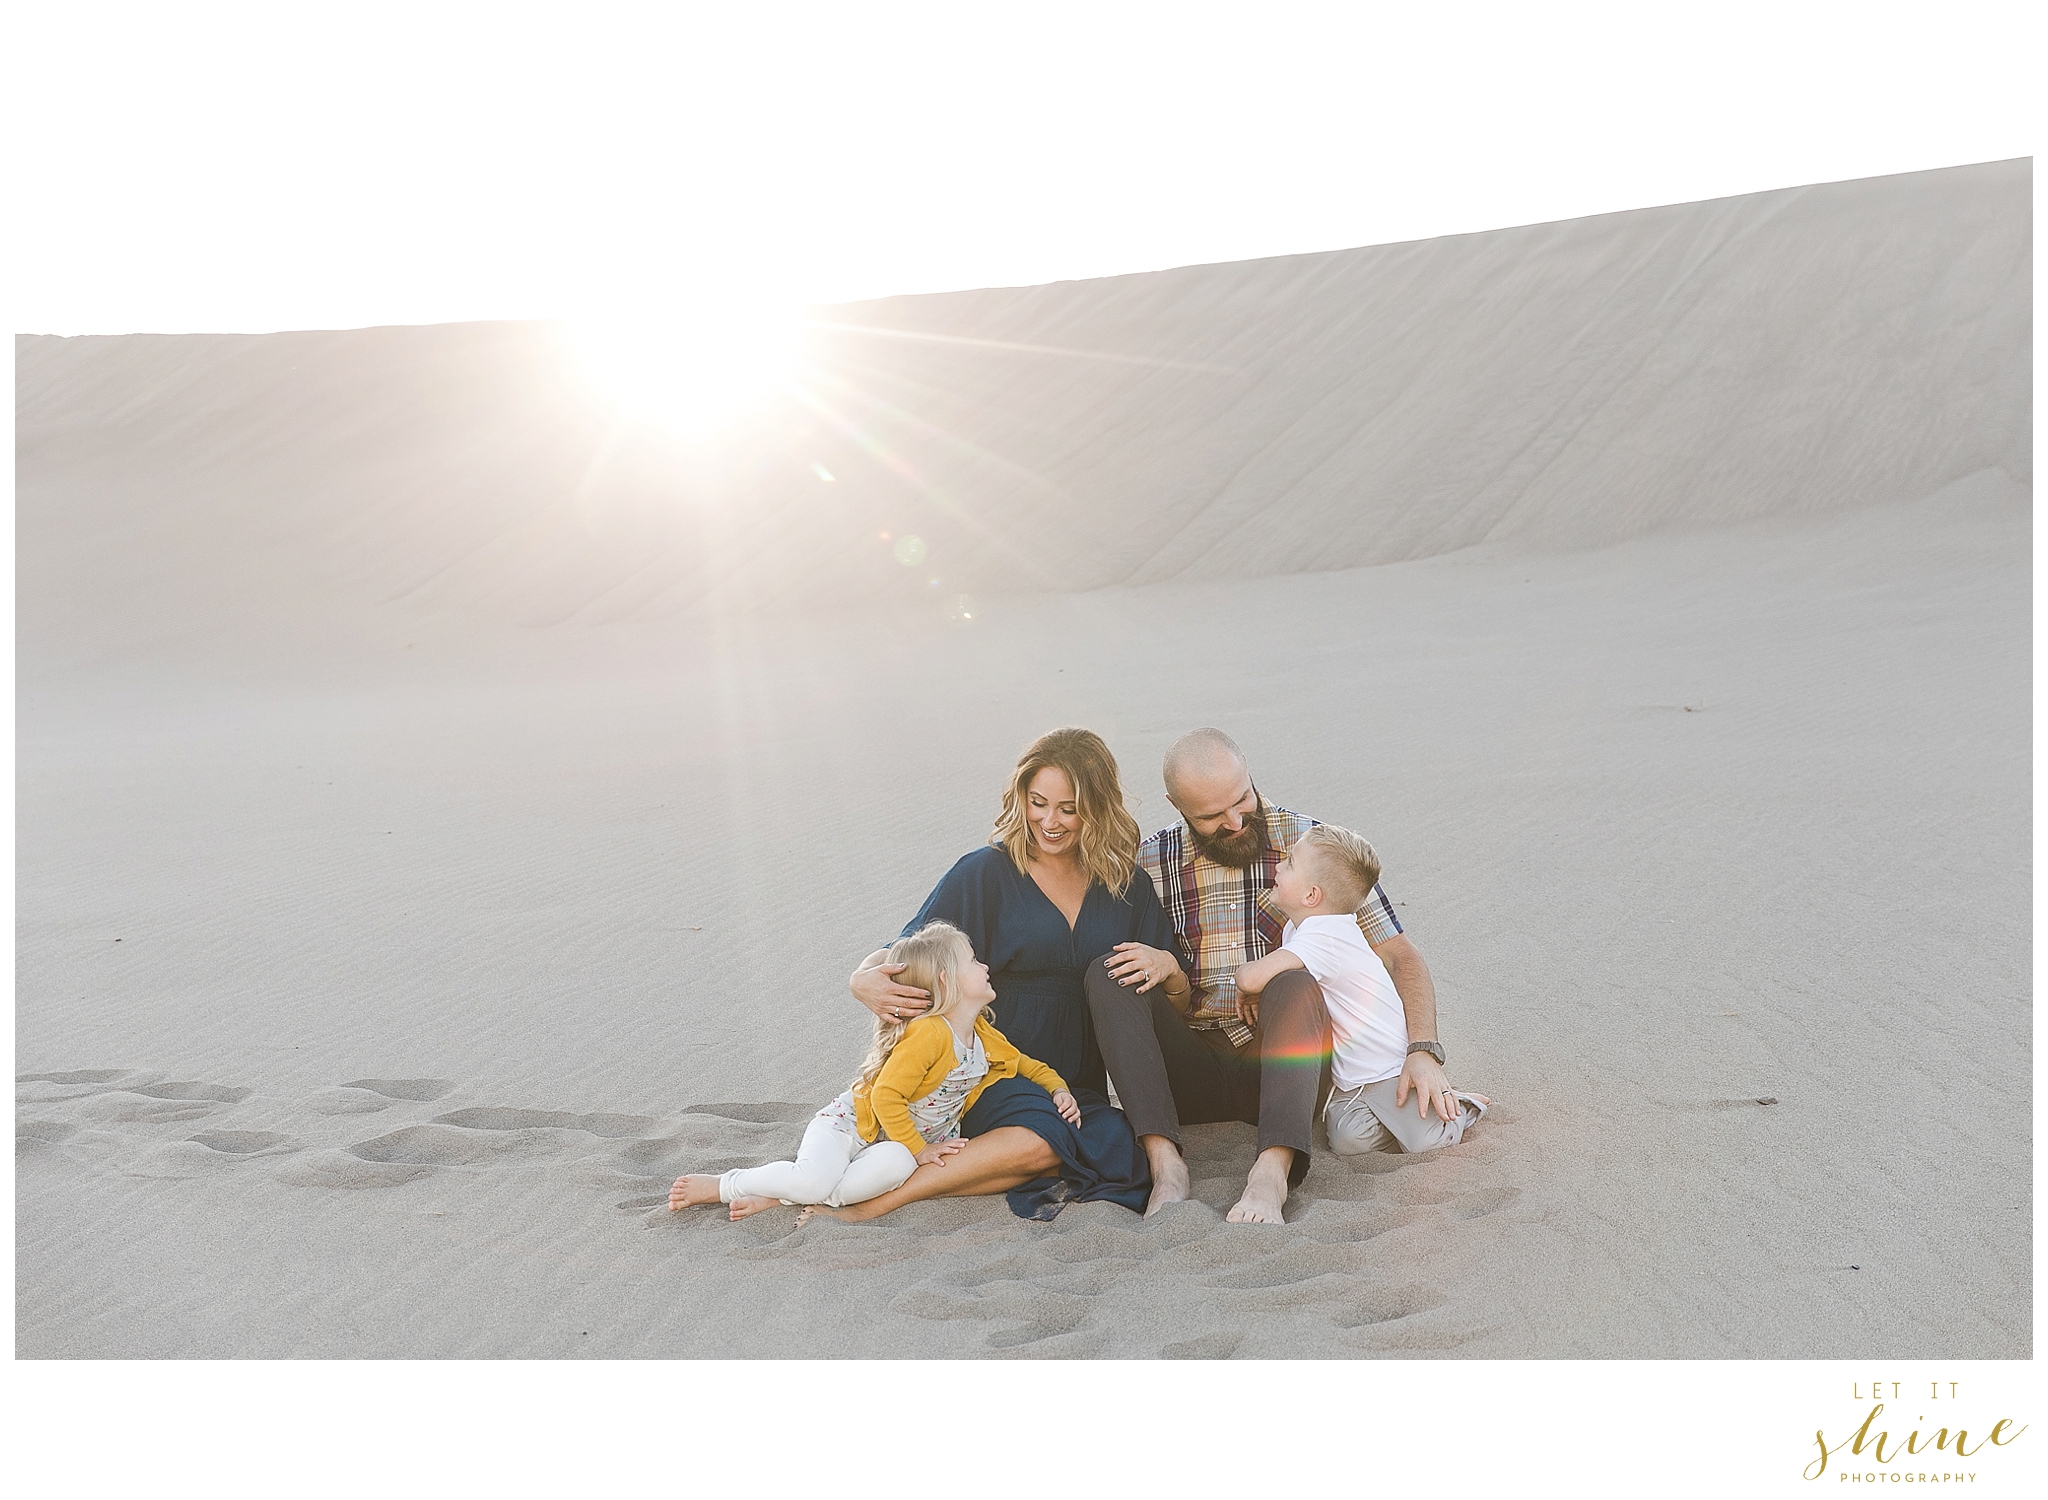 Bruneau Sand Dunes Family Session Let it shine Photography-4998.jpg